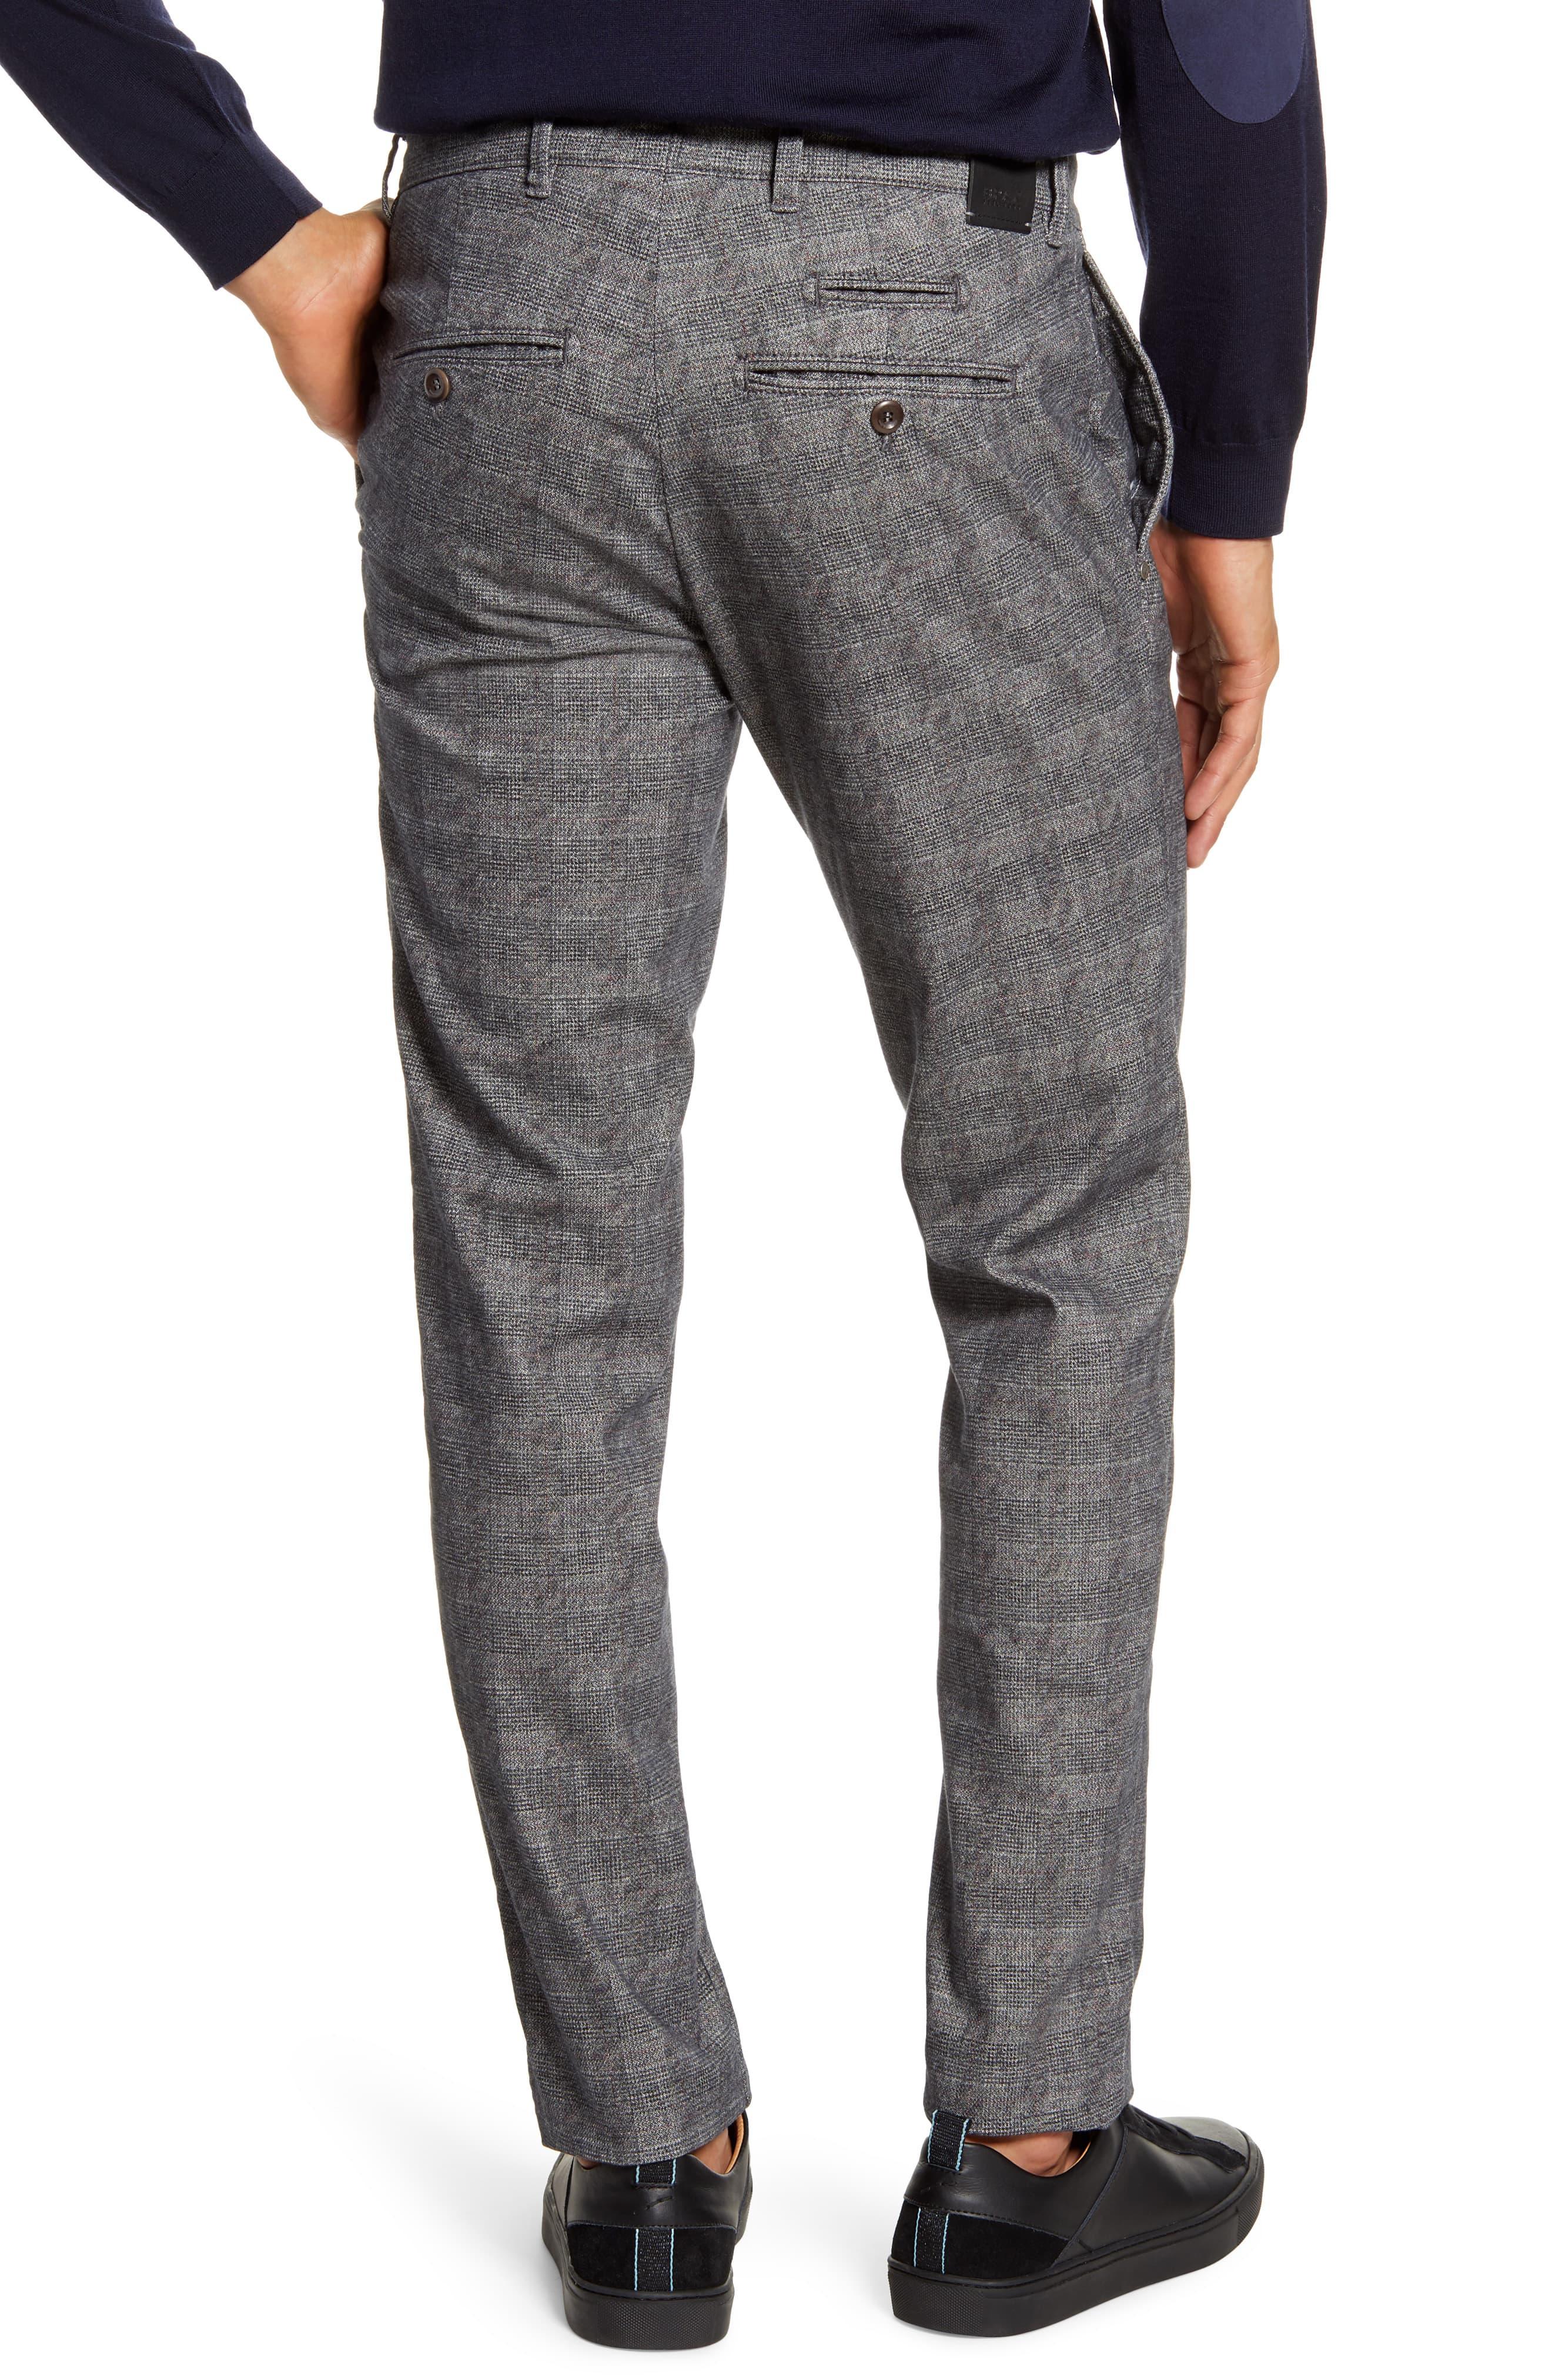 Brax Woolook 2.0 Glen Plaid Flat Front Pants in Gray for Men - Lyst